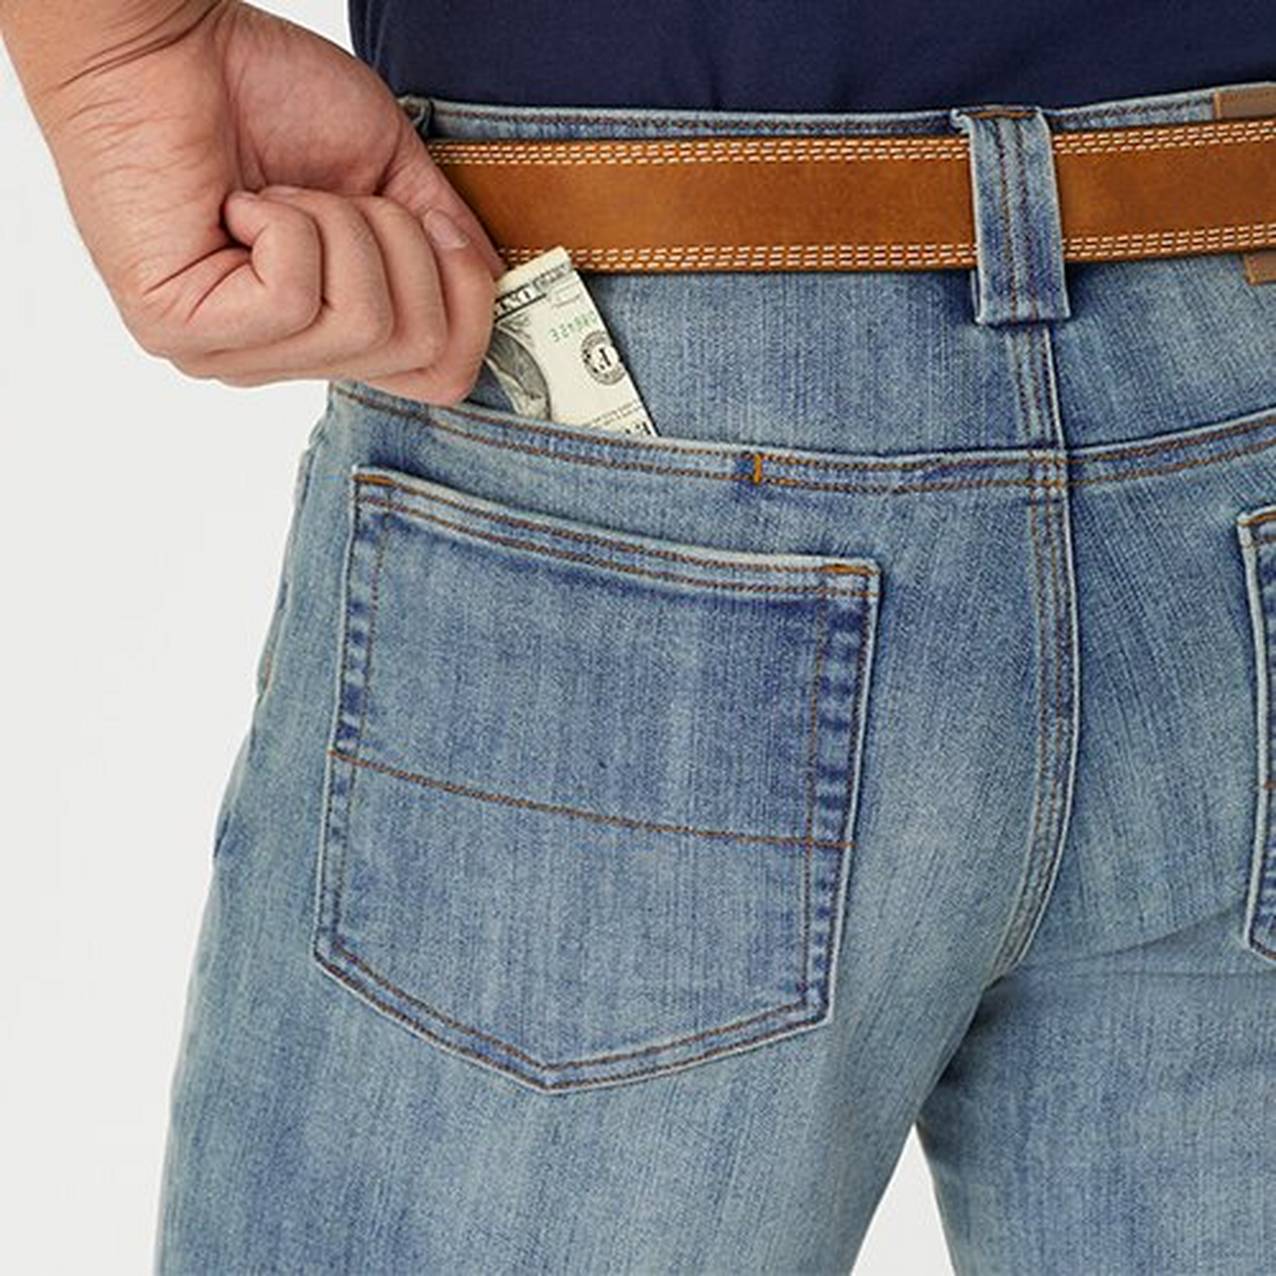 Image of man putting money in hidden pocket